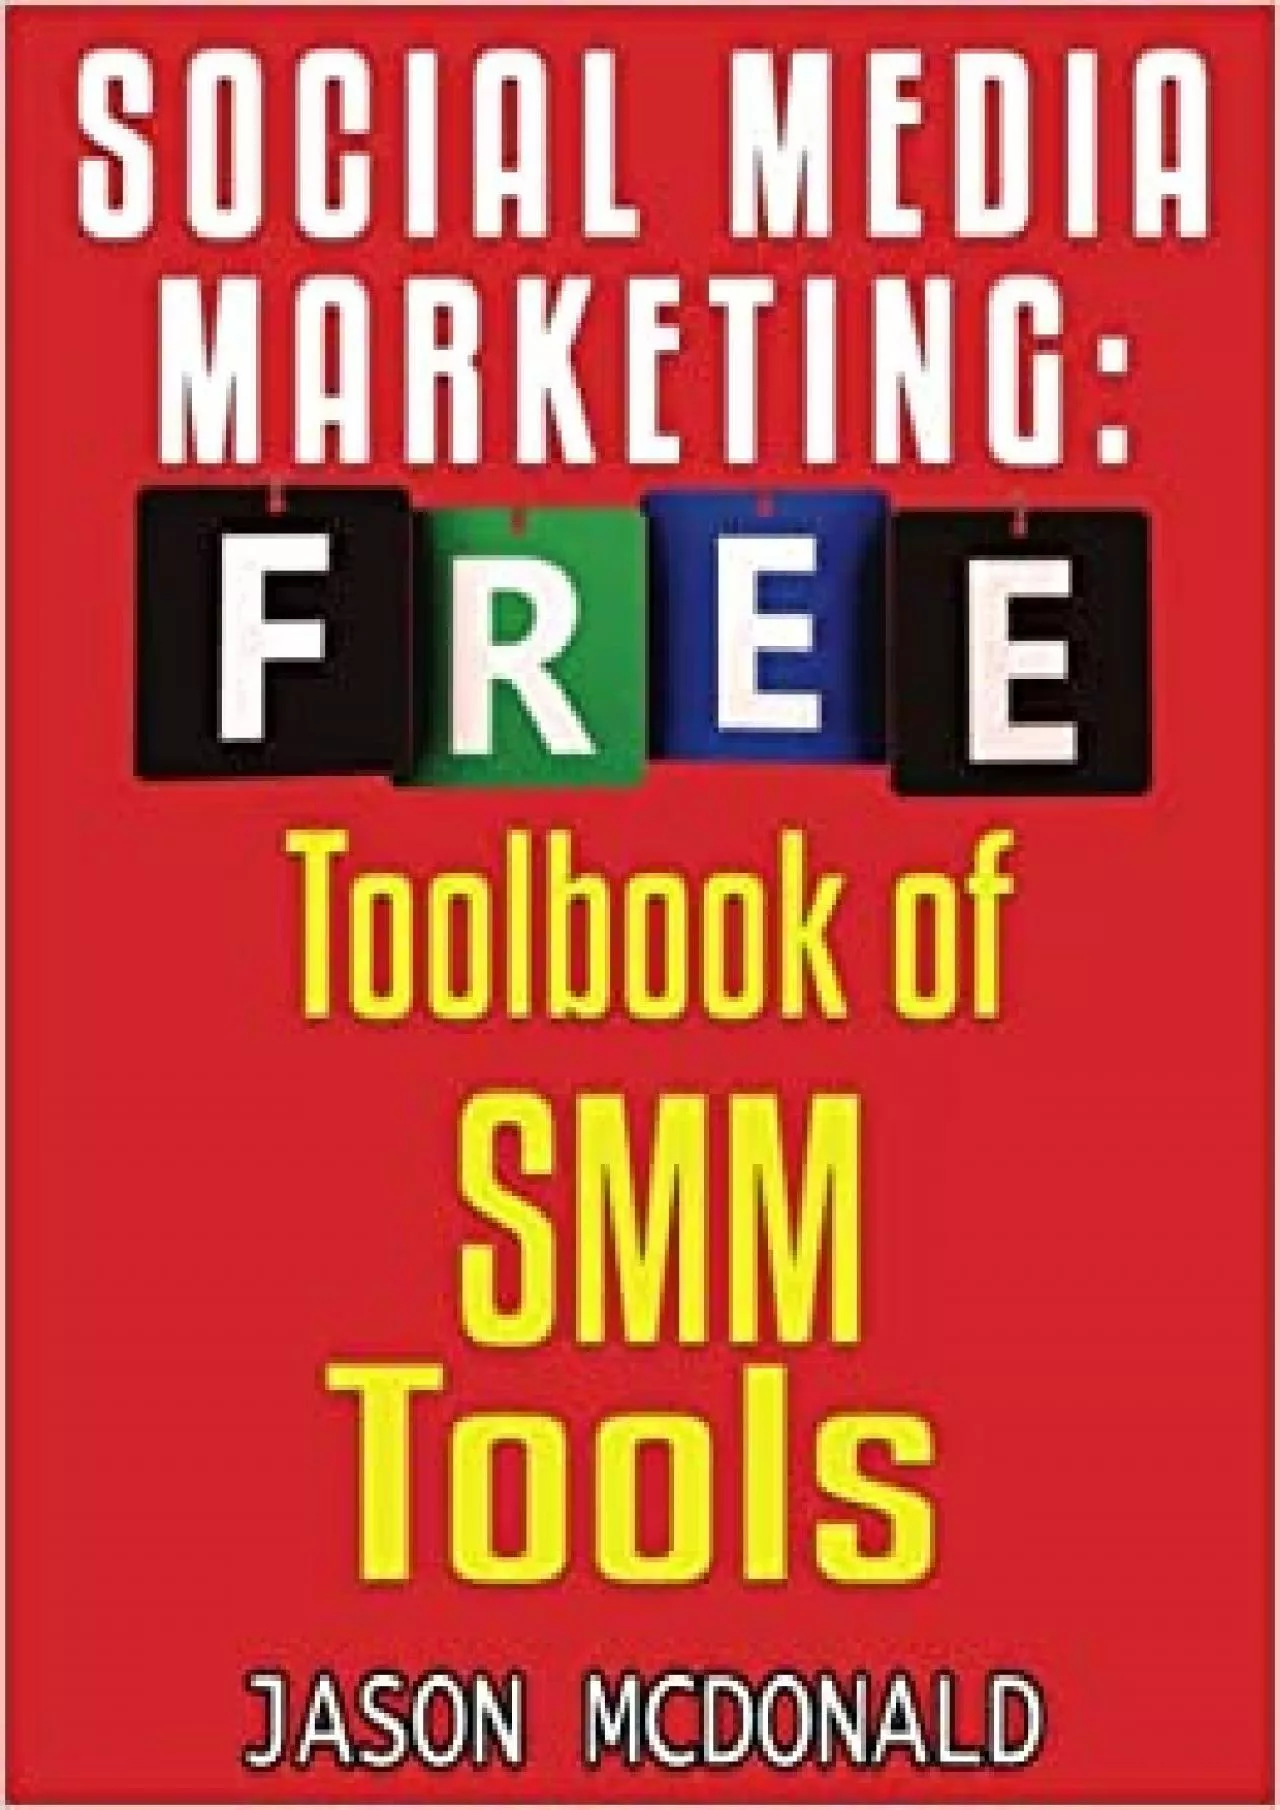 (BOOK)-Social Media Marketing Toolbook Ultimate Almanac of Free SMM Tools Apps Plugins